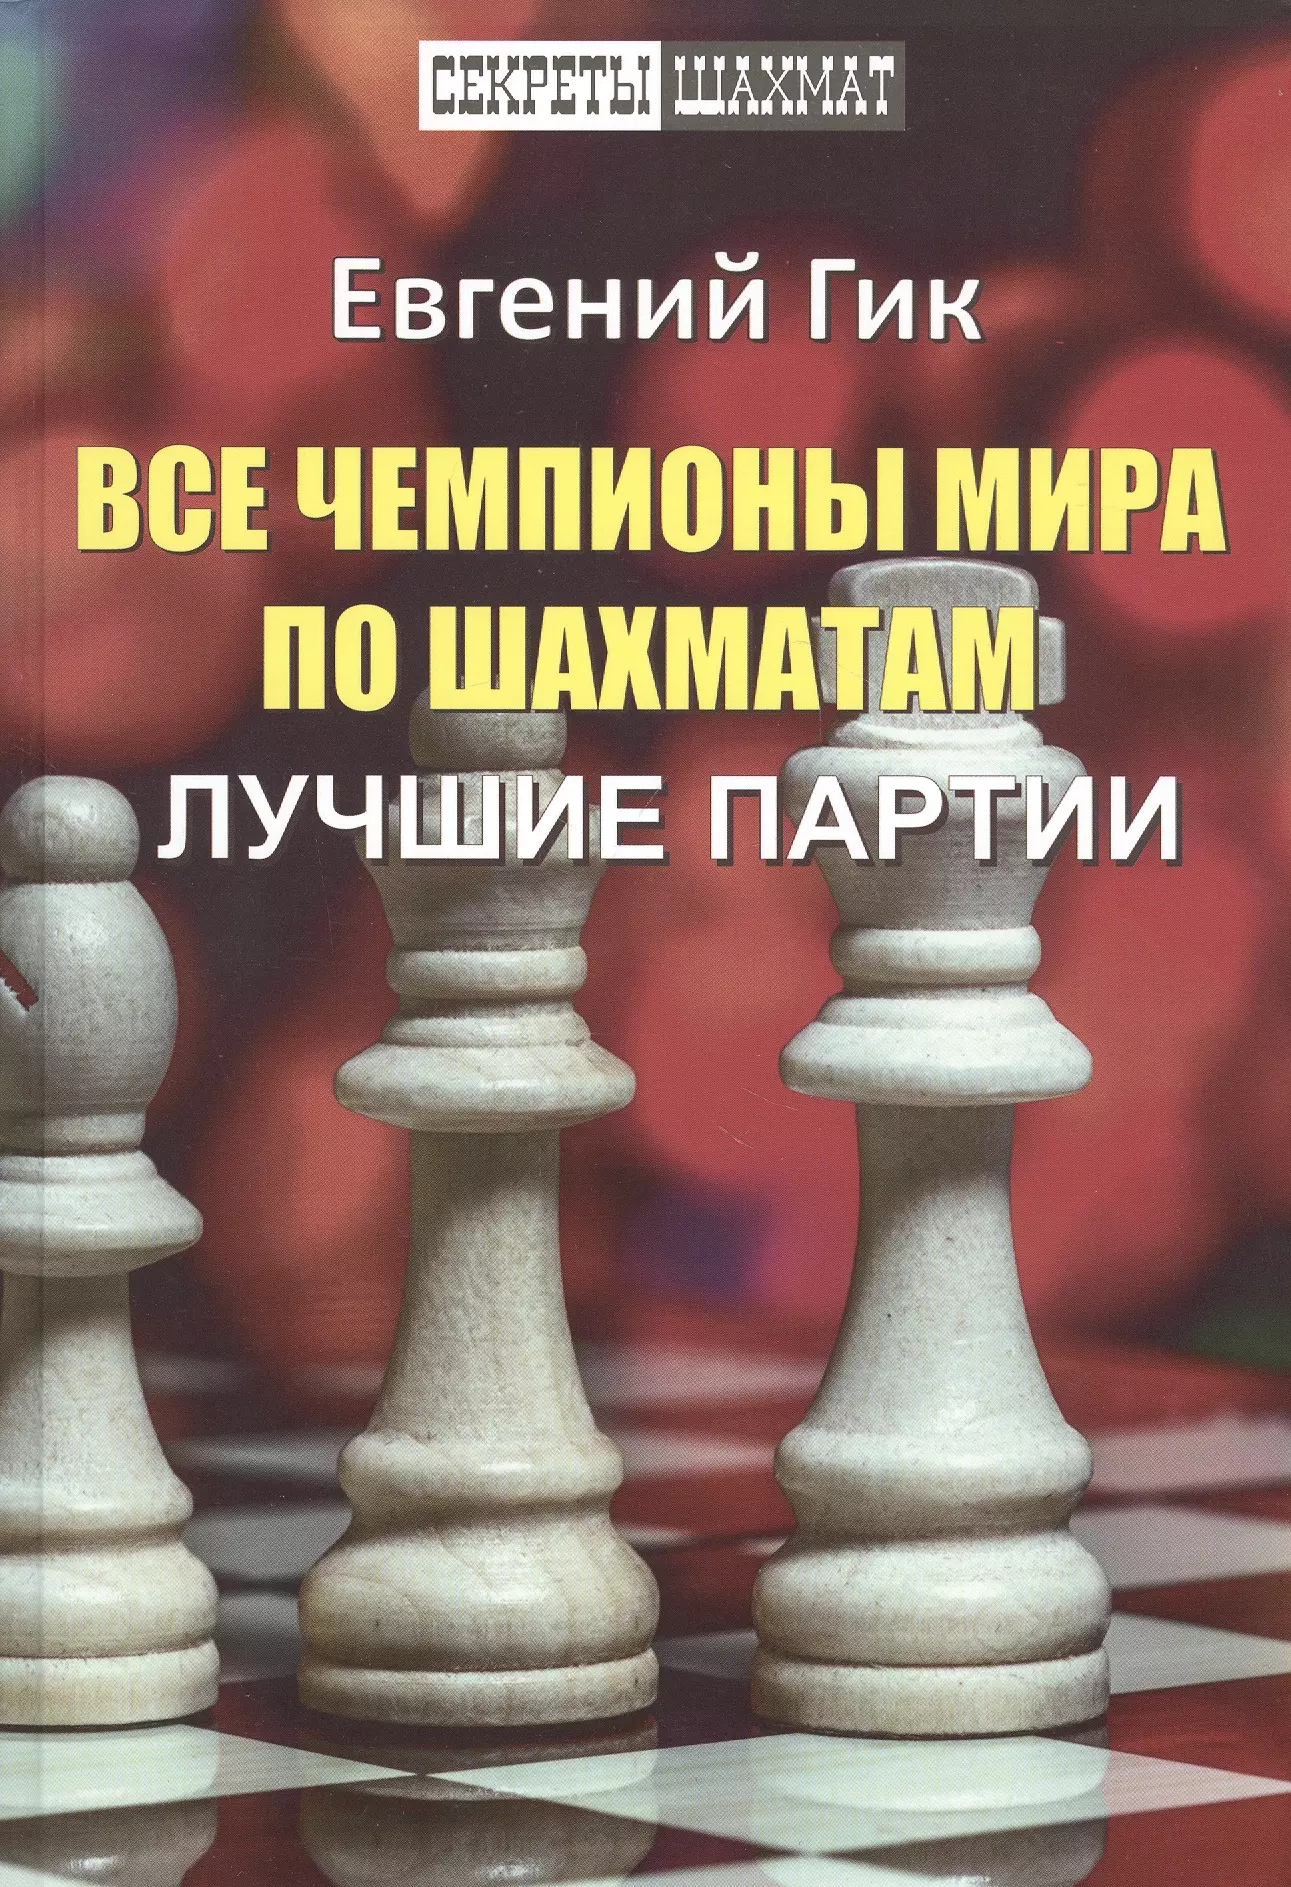 Шахматный клуб Chess First г. Мытищи, пр Астрахова 7. ЖК Лидер парк